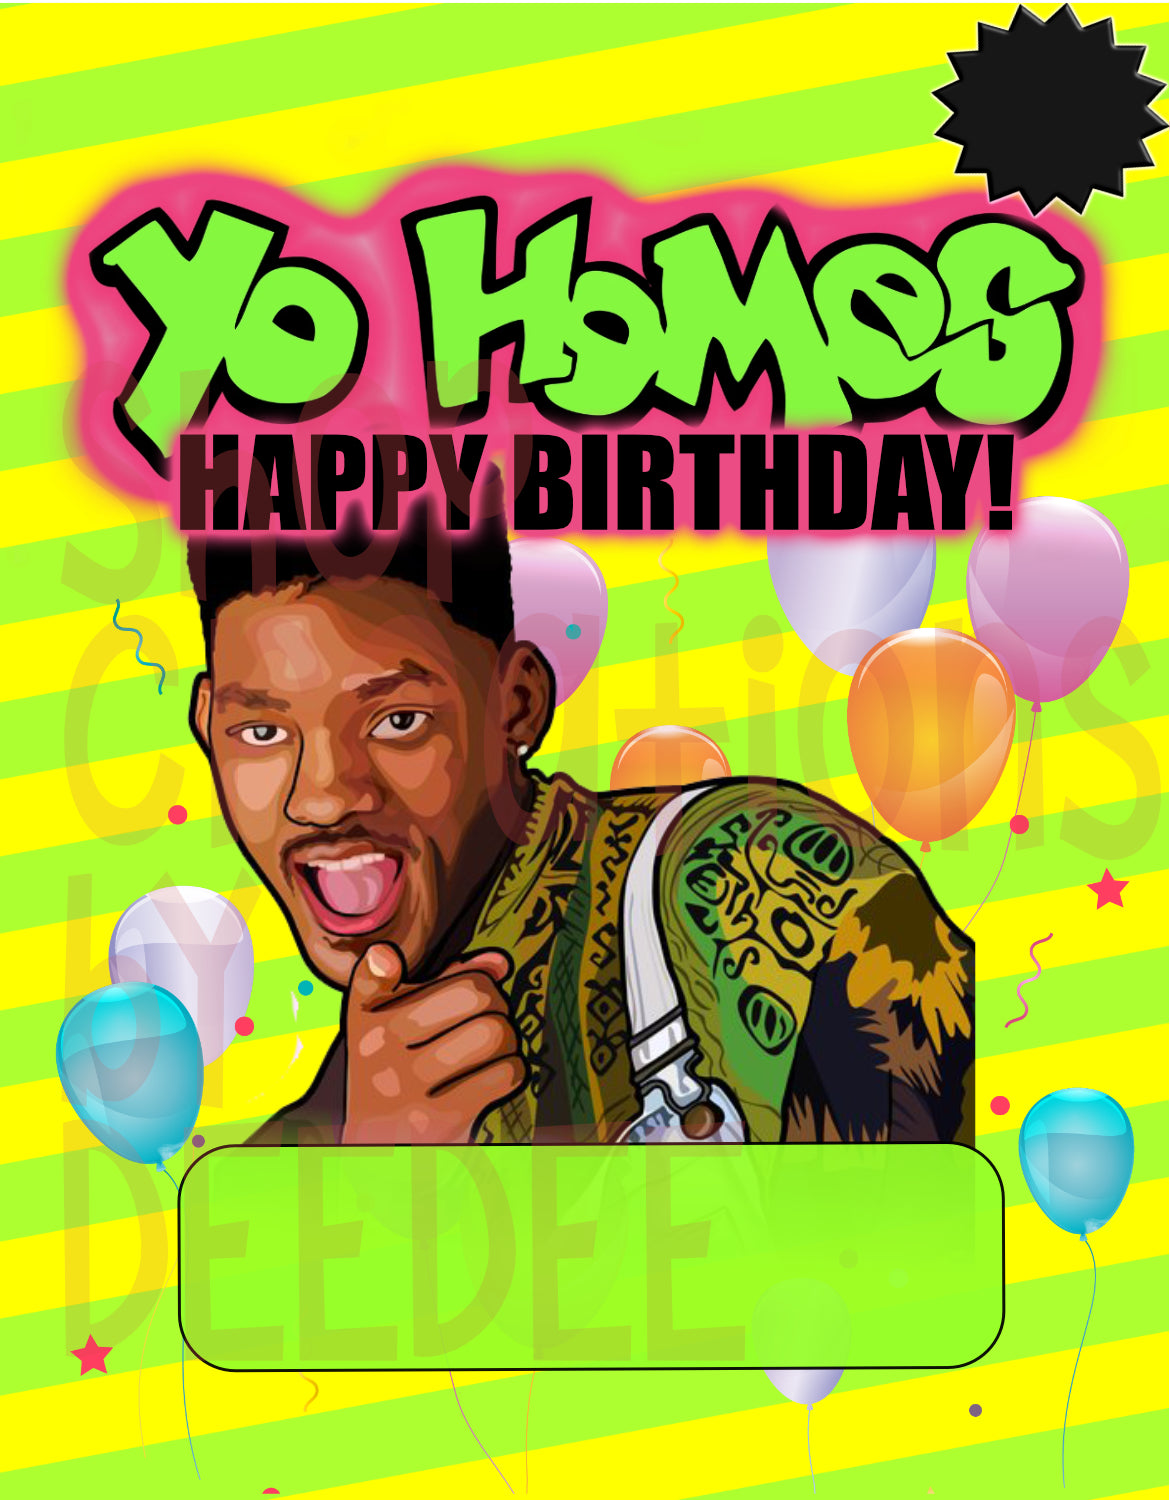 Yo homes happy birthday-money holder card template